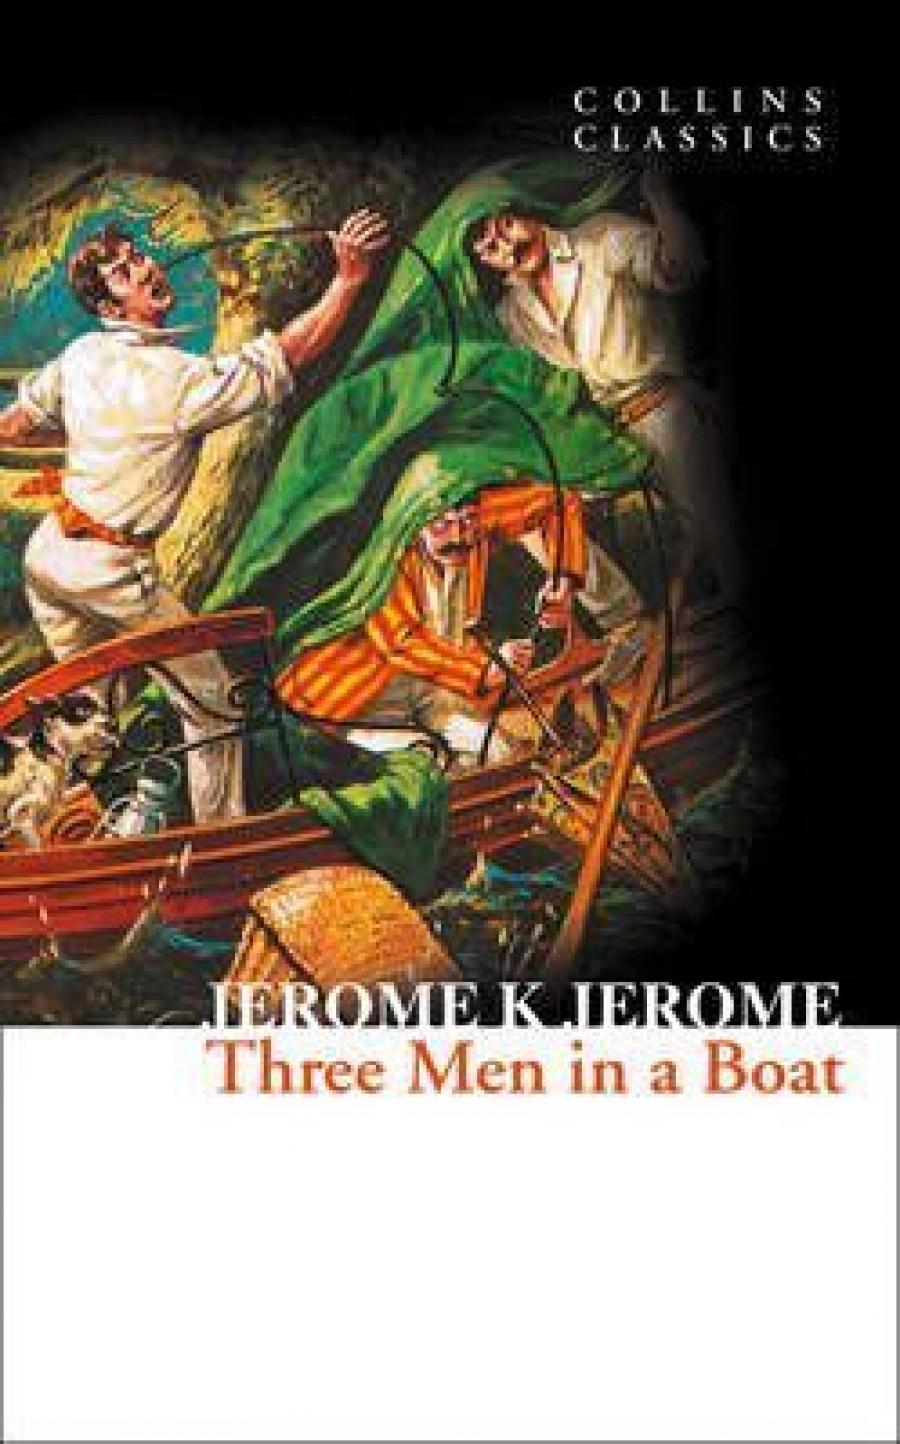 Jerome K. Jerome Three Men In A Boat (Collins Classics) 